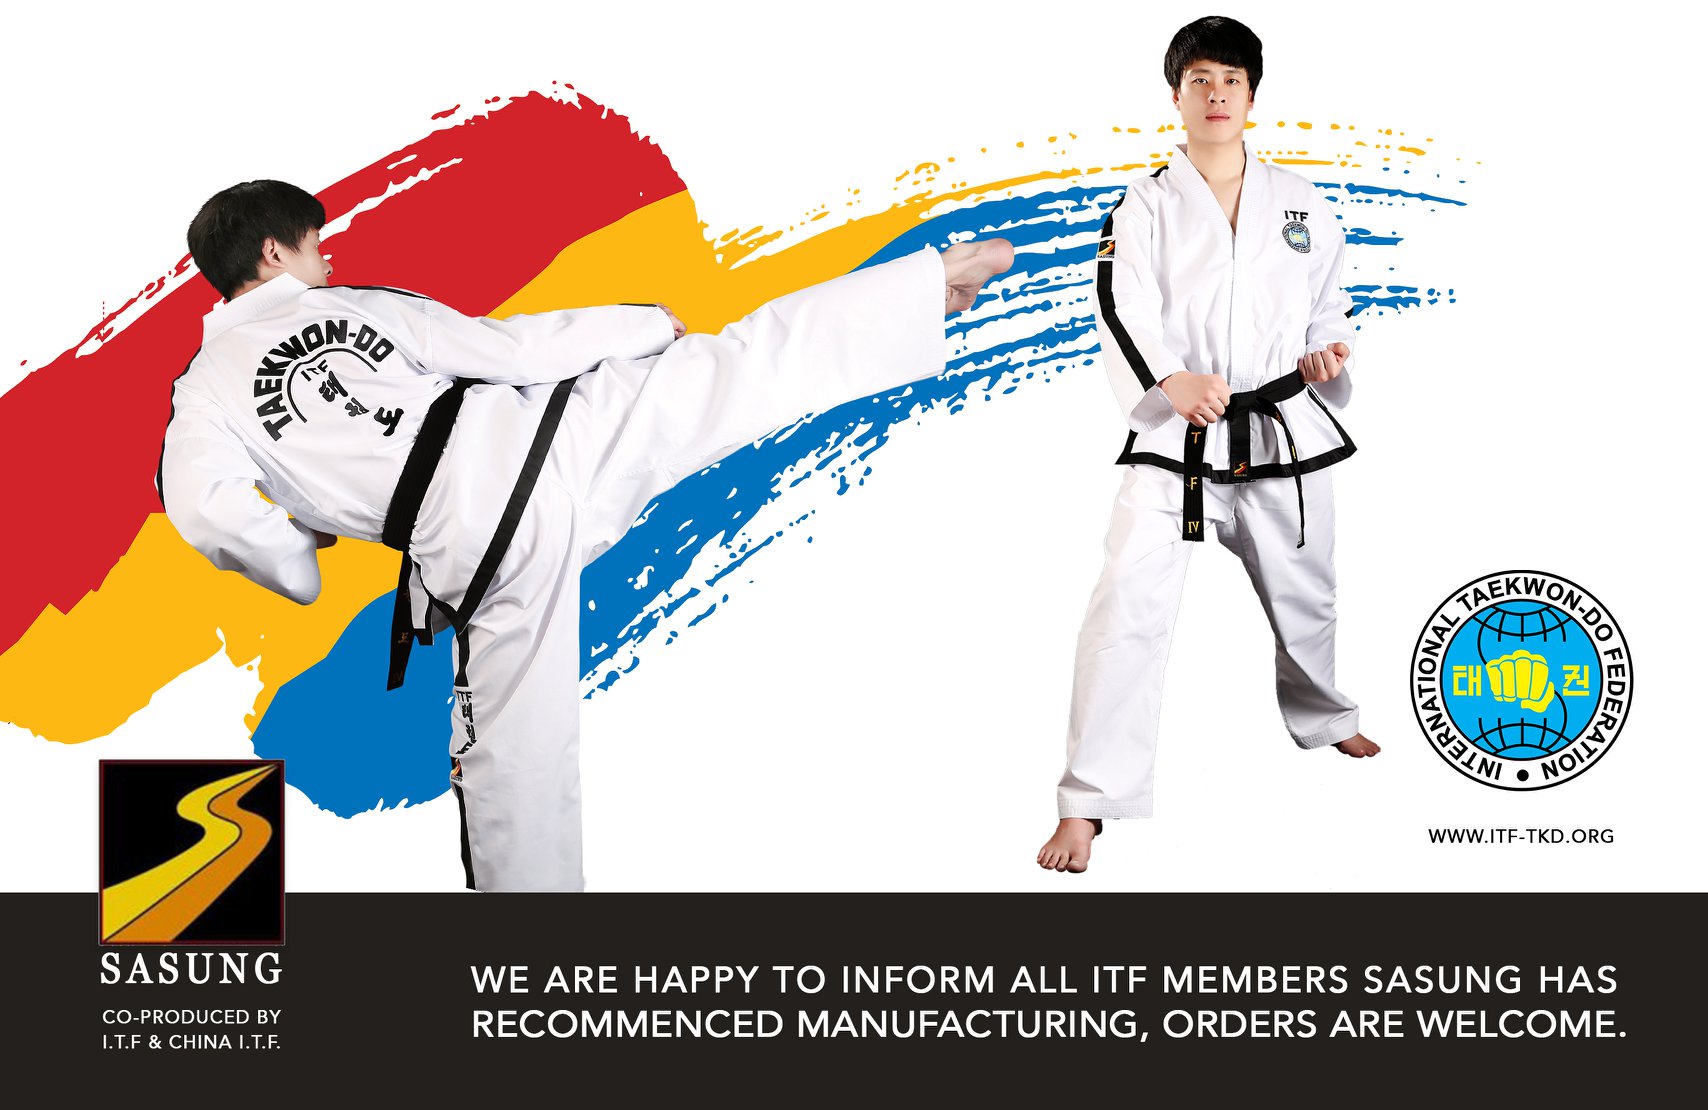 TAEKWONDO SOCKS AND MASKS HAVE ARRIVED!  By Chang's Taekwondo Martial  ArtsFacebook